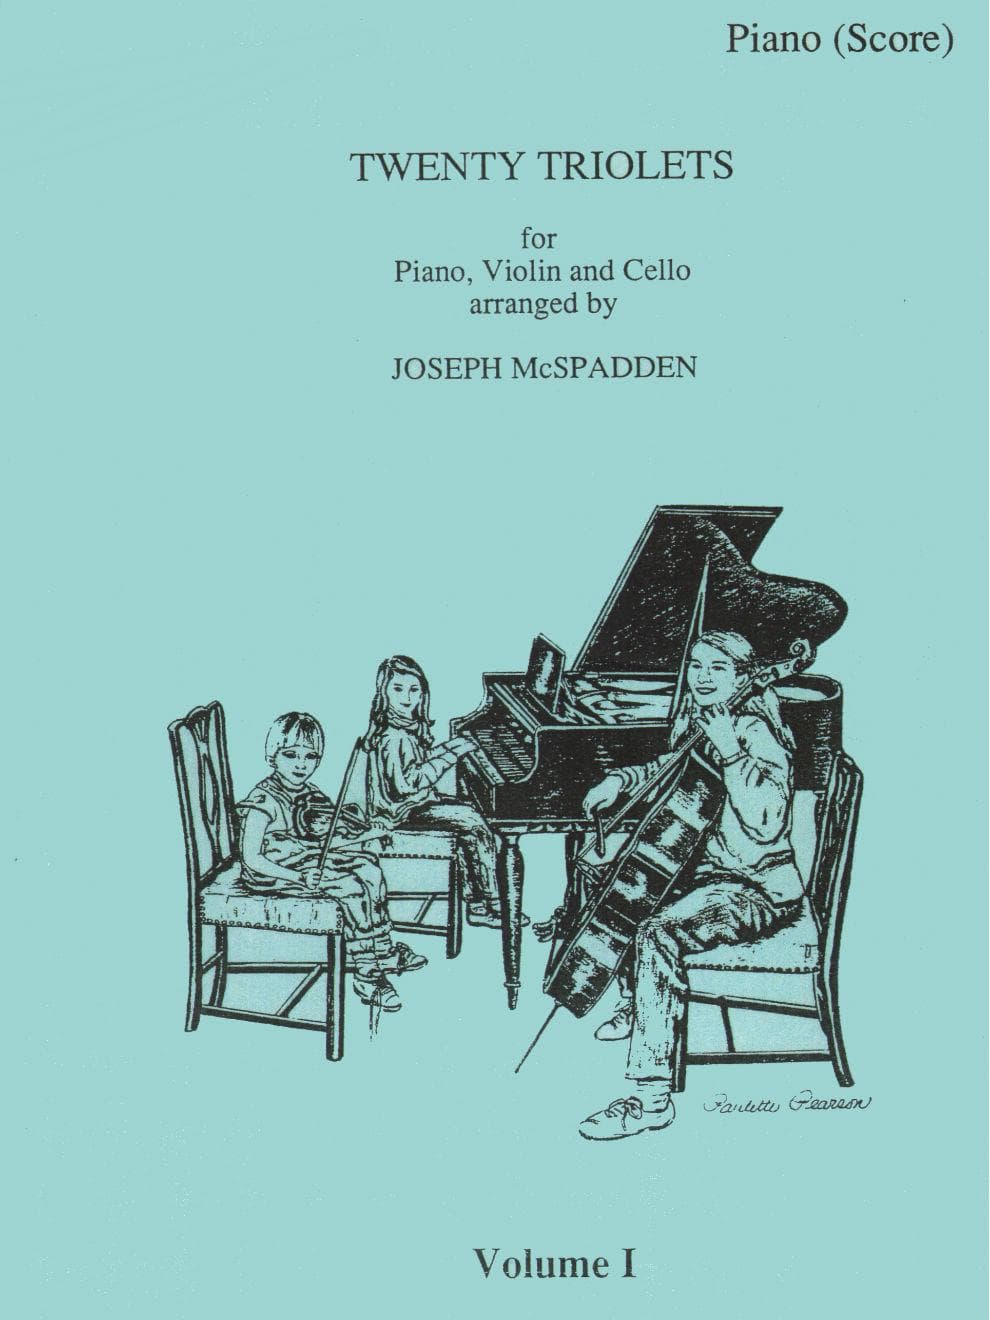 Twenty Triolets, Volume 1 - Violin, Cello, and Piano - arranged by Joseph McSpadden - Mariposa Music Inc